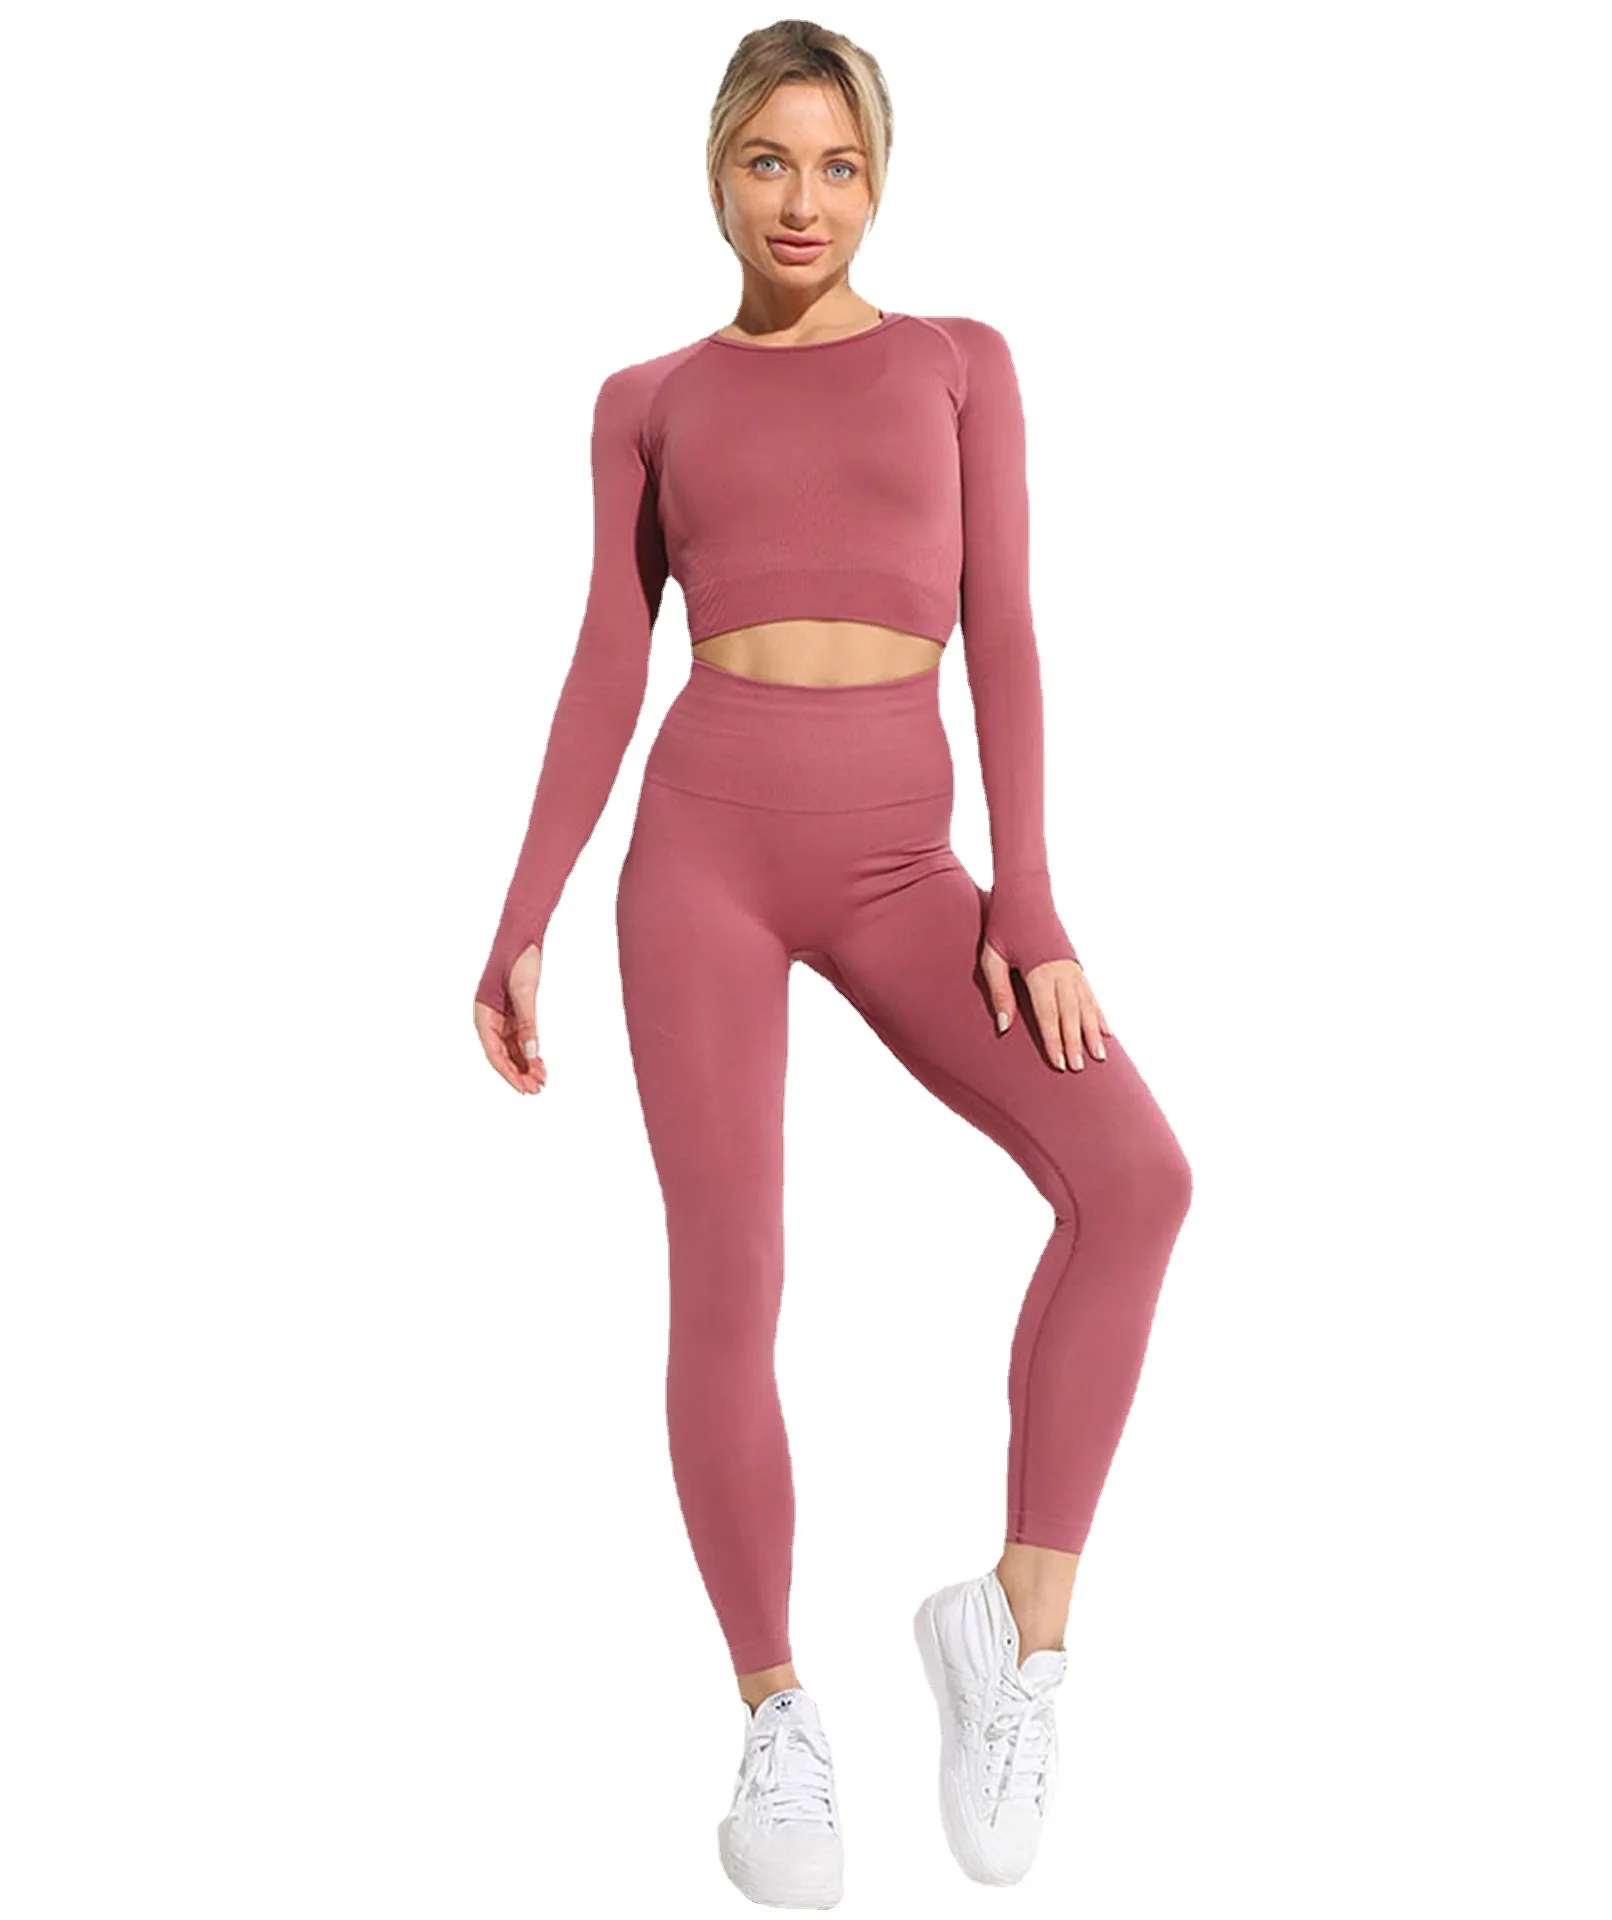 

High Waist Sport Fitness Seamless Active wear Girls Fitness Yoga Wear Long Sleeve top Legging Yoga Set, Accept customers color